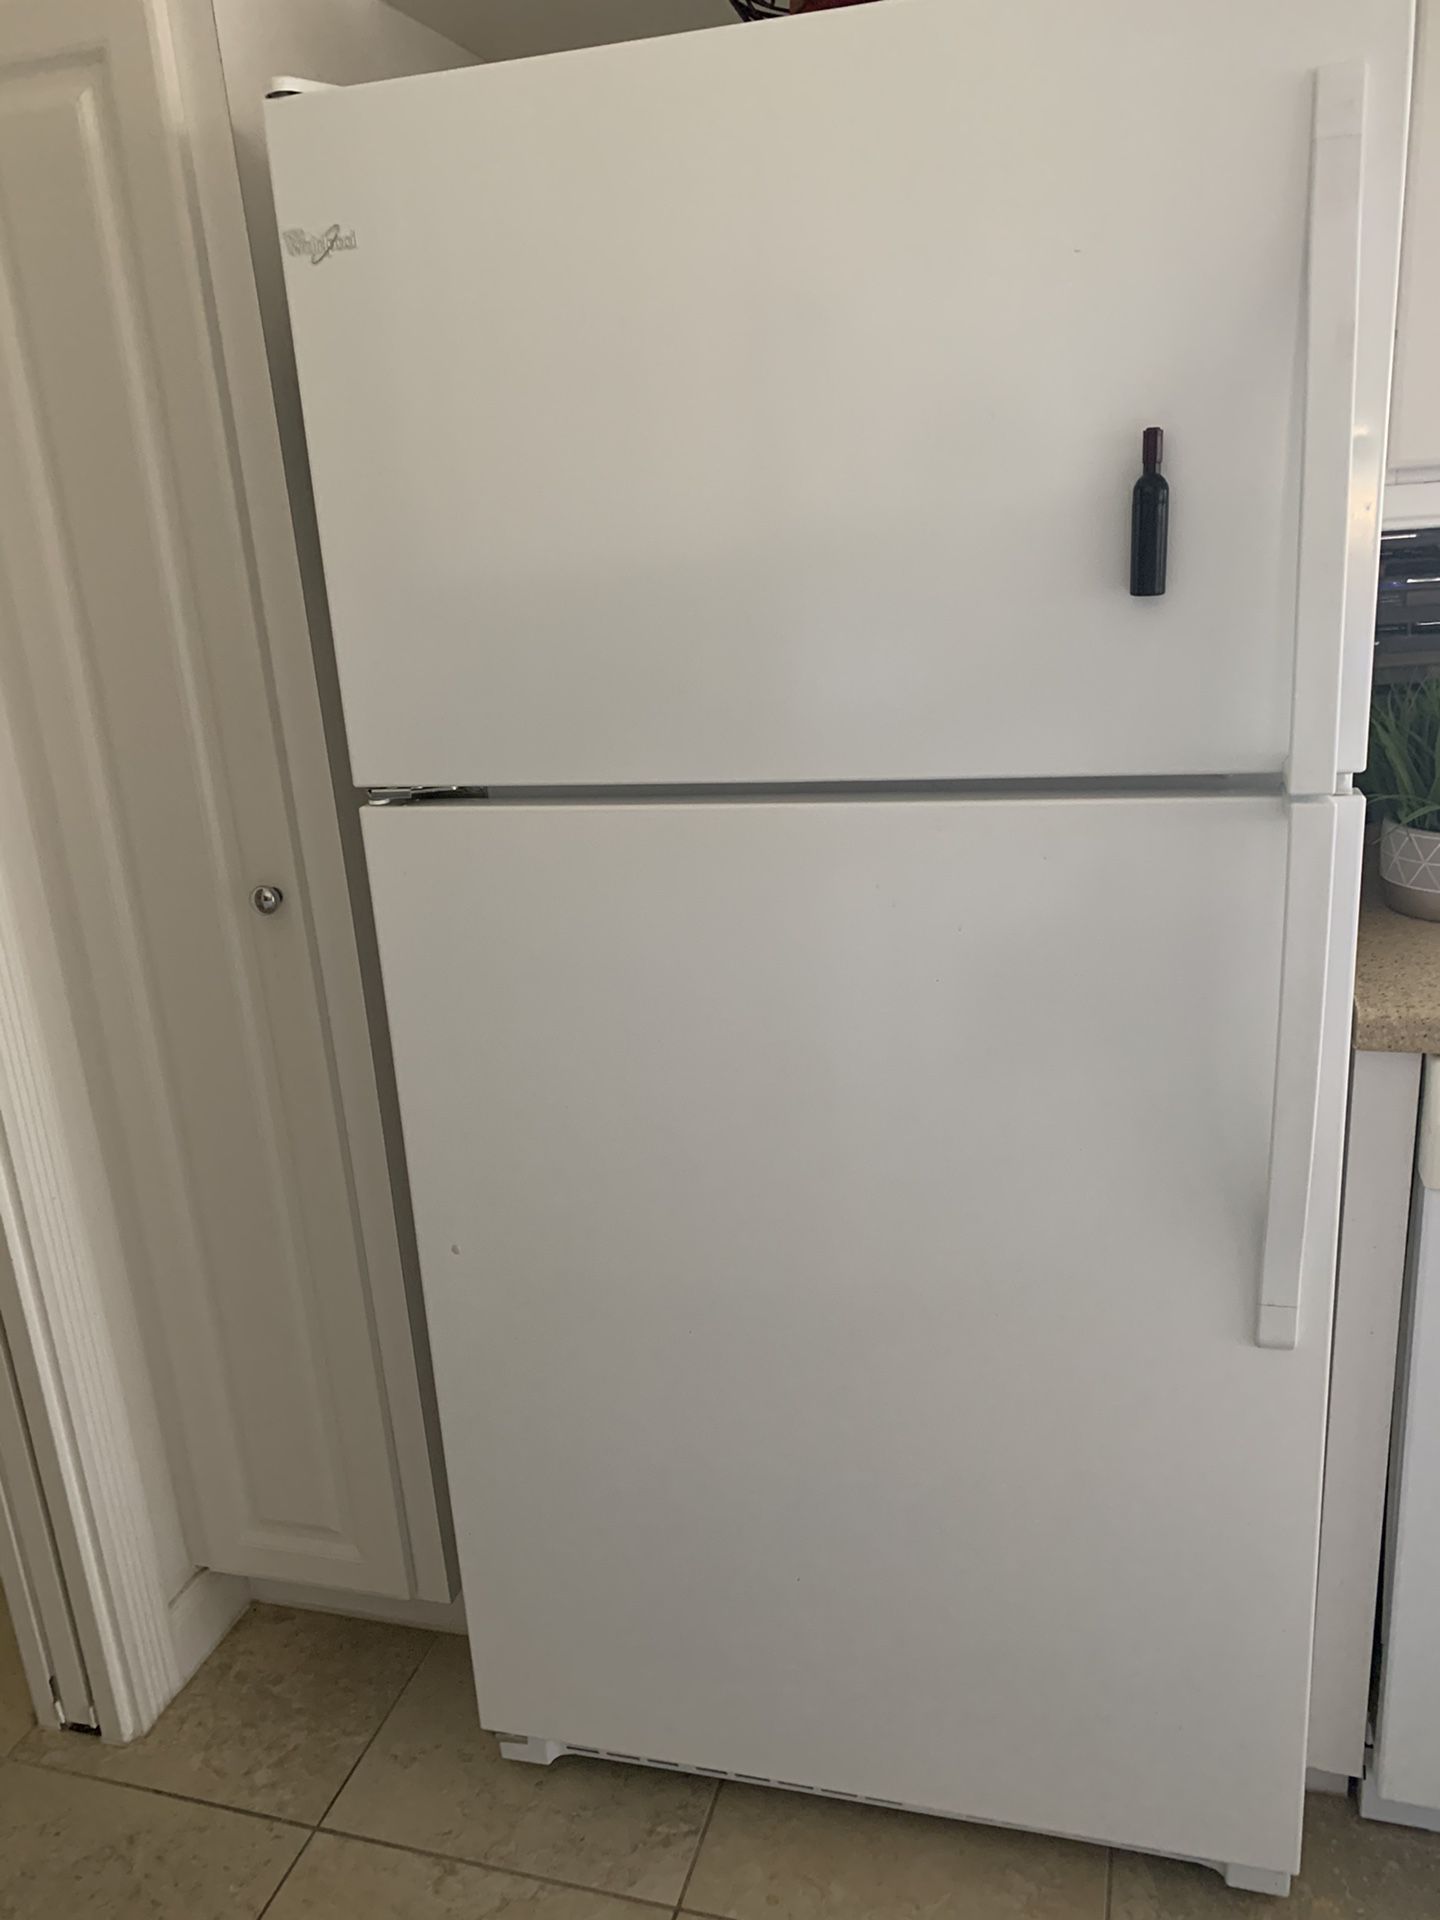 Whirpool fridgerator